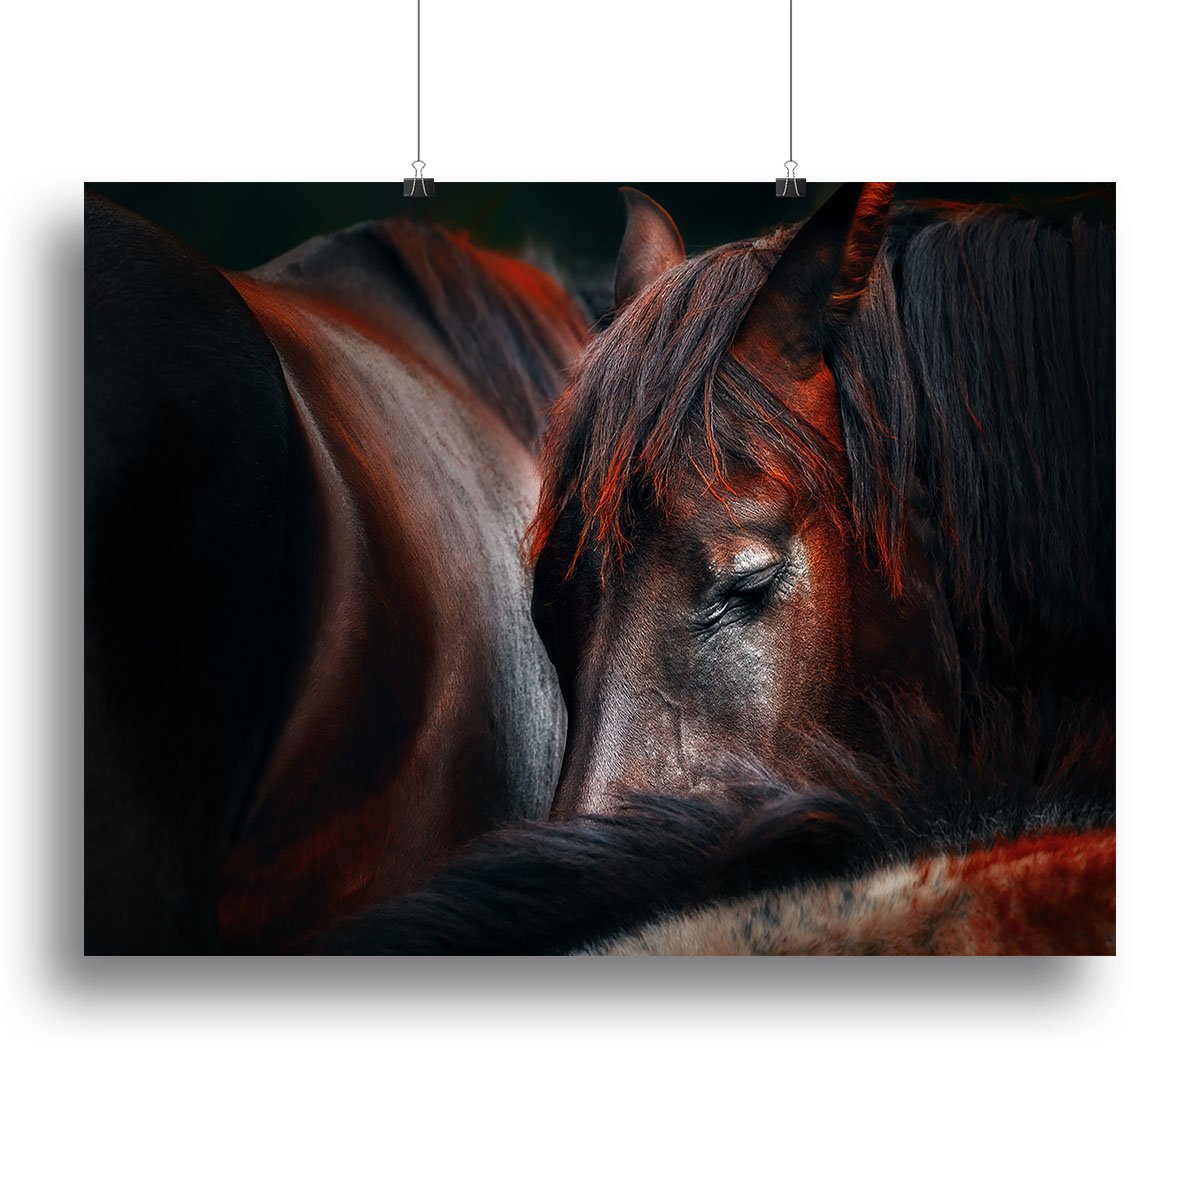 Horses Sleep In A Huddle Canvas Print or Poster - Canvas Art Rocks - 2